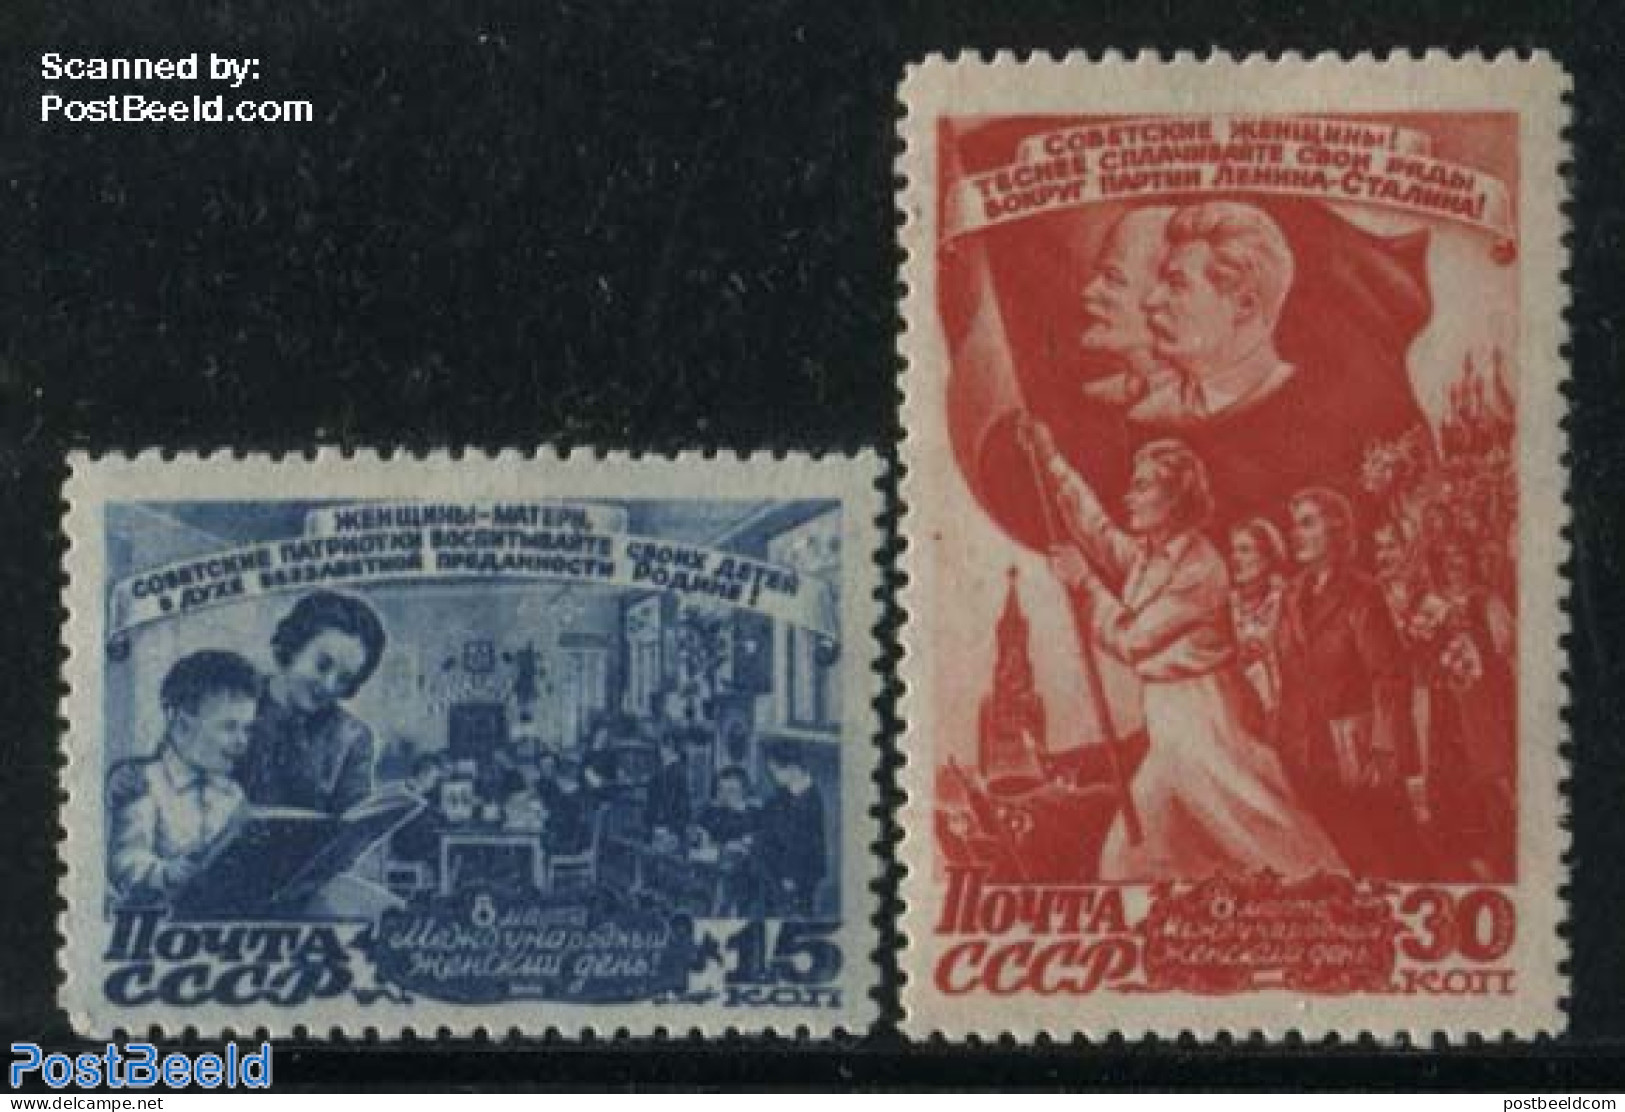 Russia, Soviet Union 1947 International Woman Day 2v, Unused (hinged), History - Women - Unused Stamps